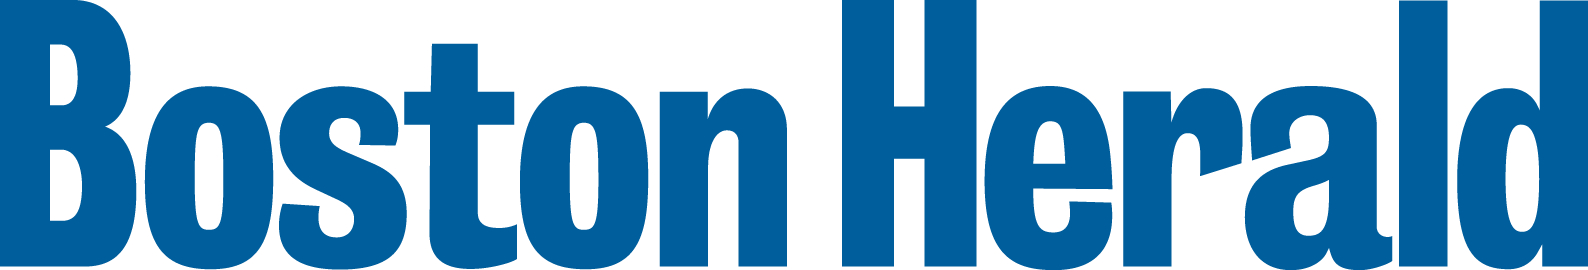 Boston Herald logo.